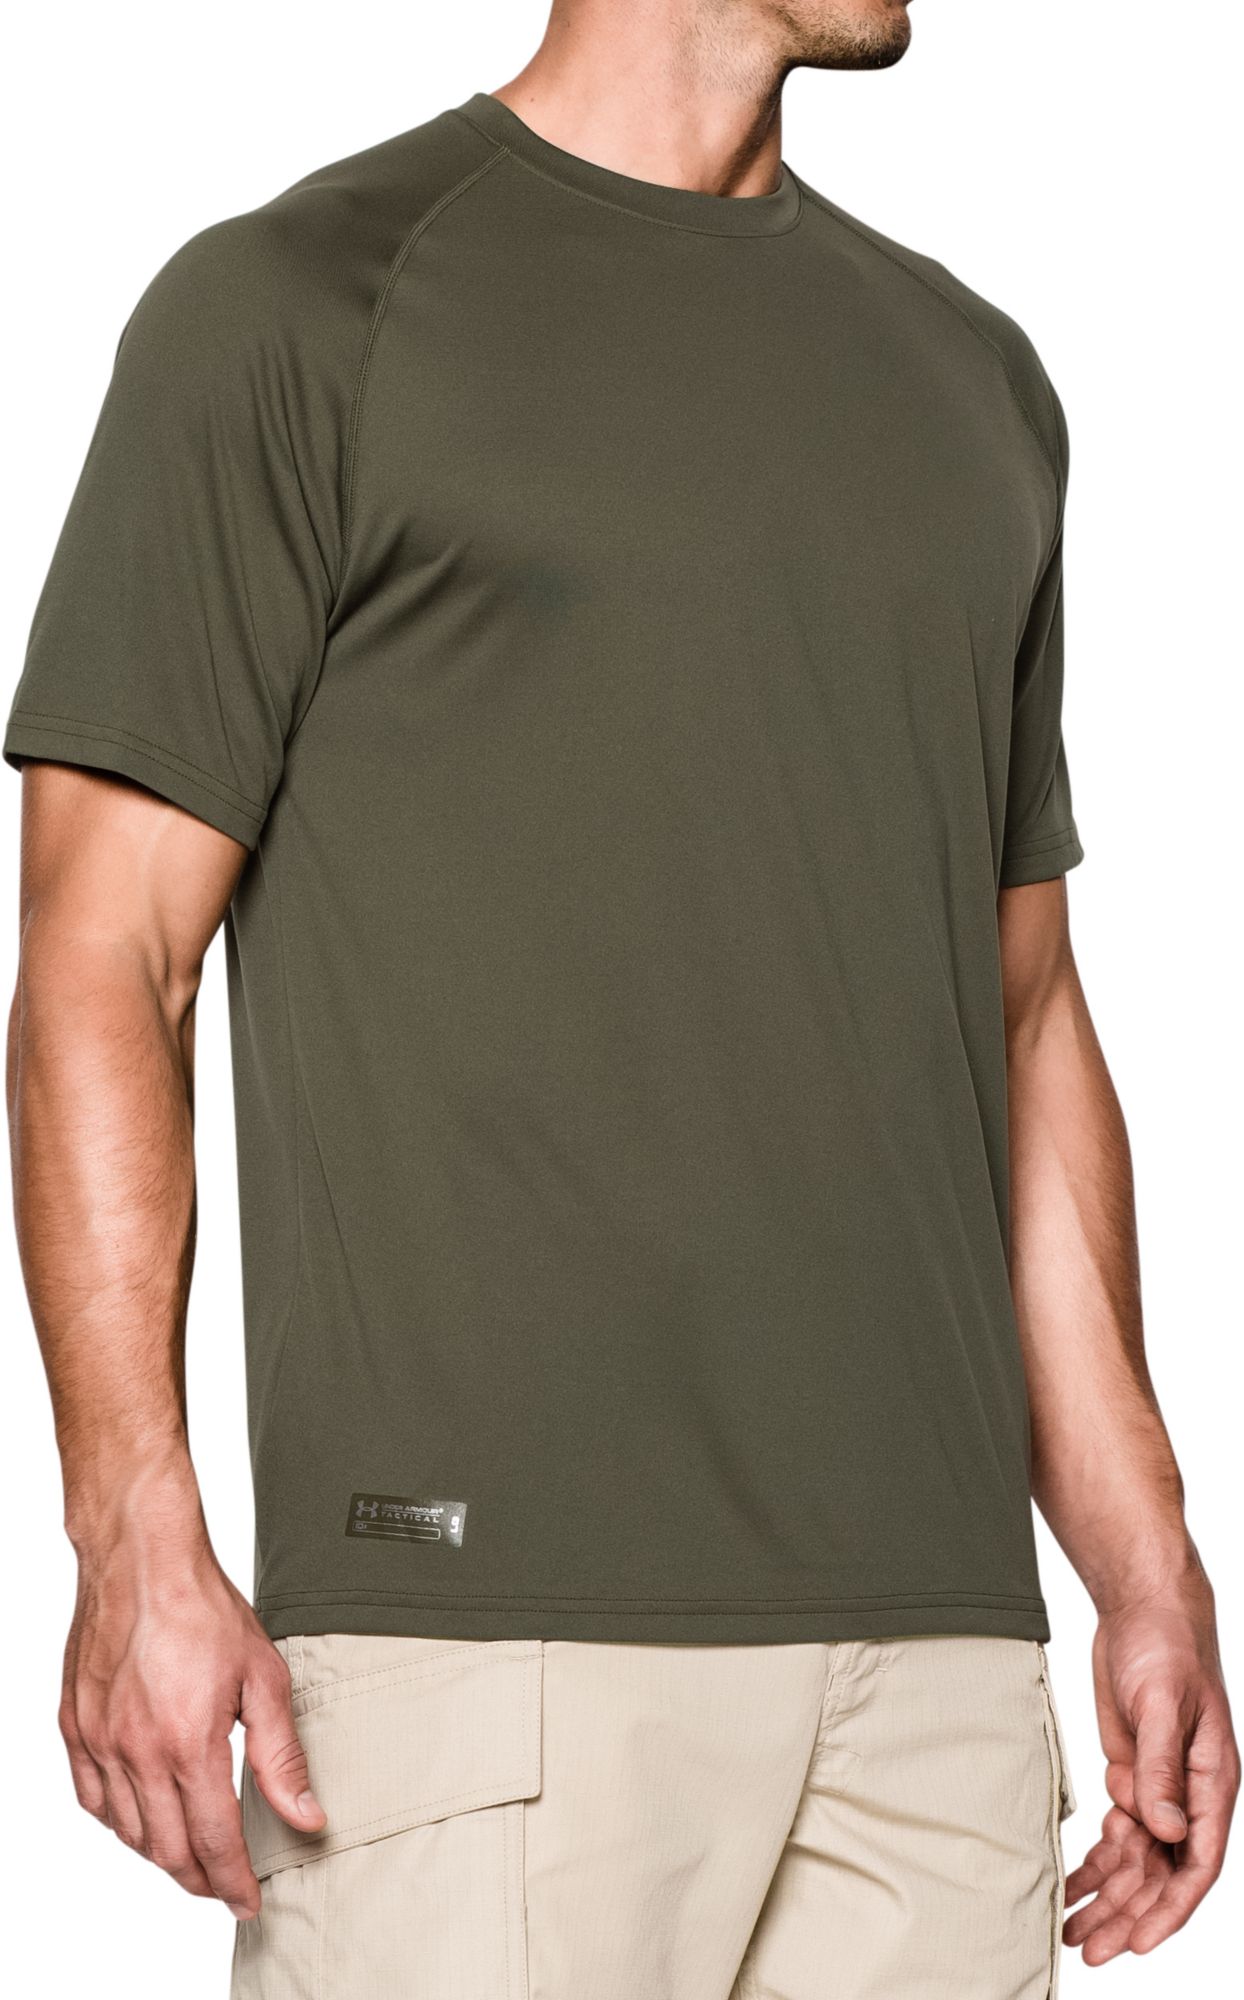 Under Armour ColdGear Infrared Tactical Tech T-Shirts - Men's